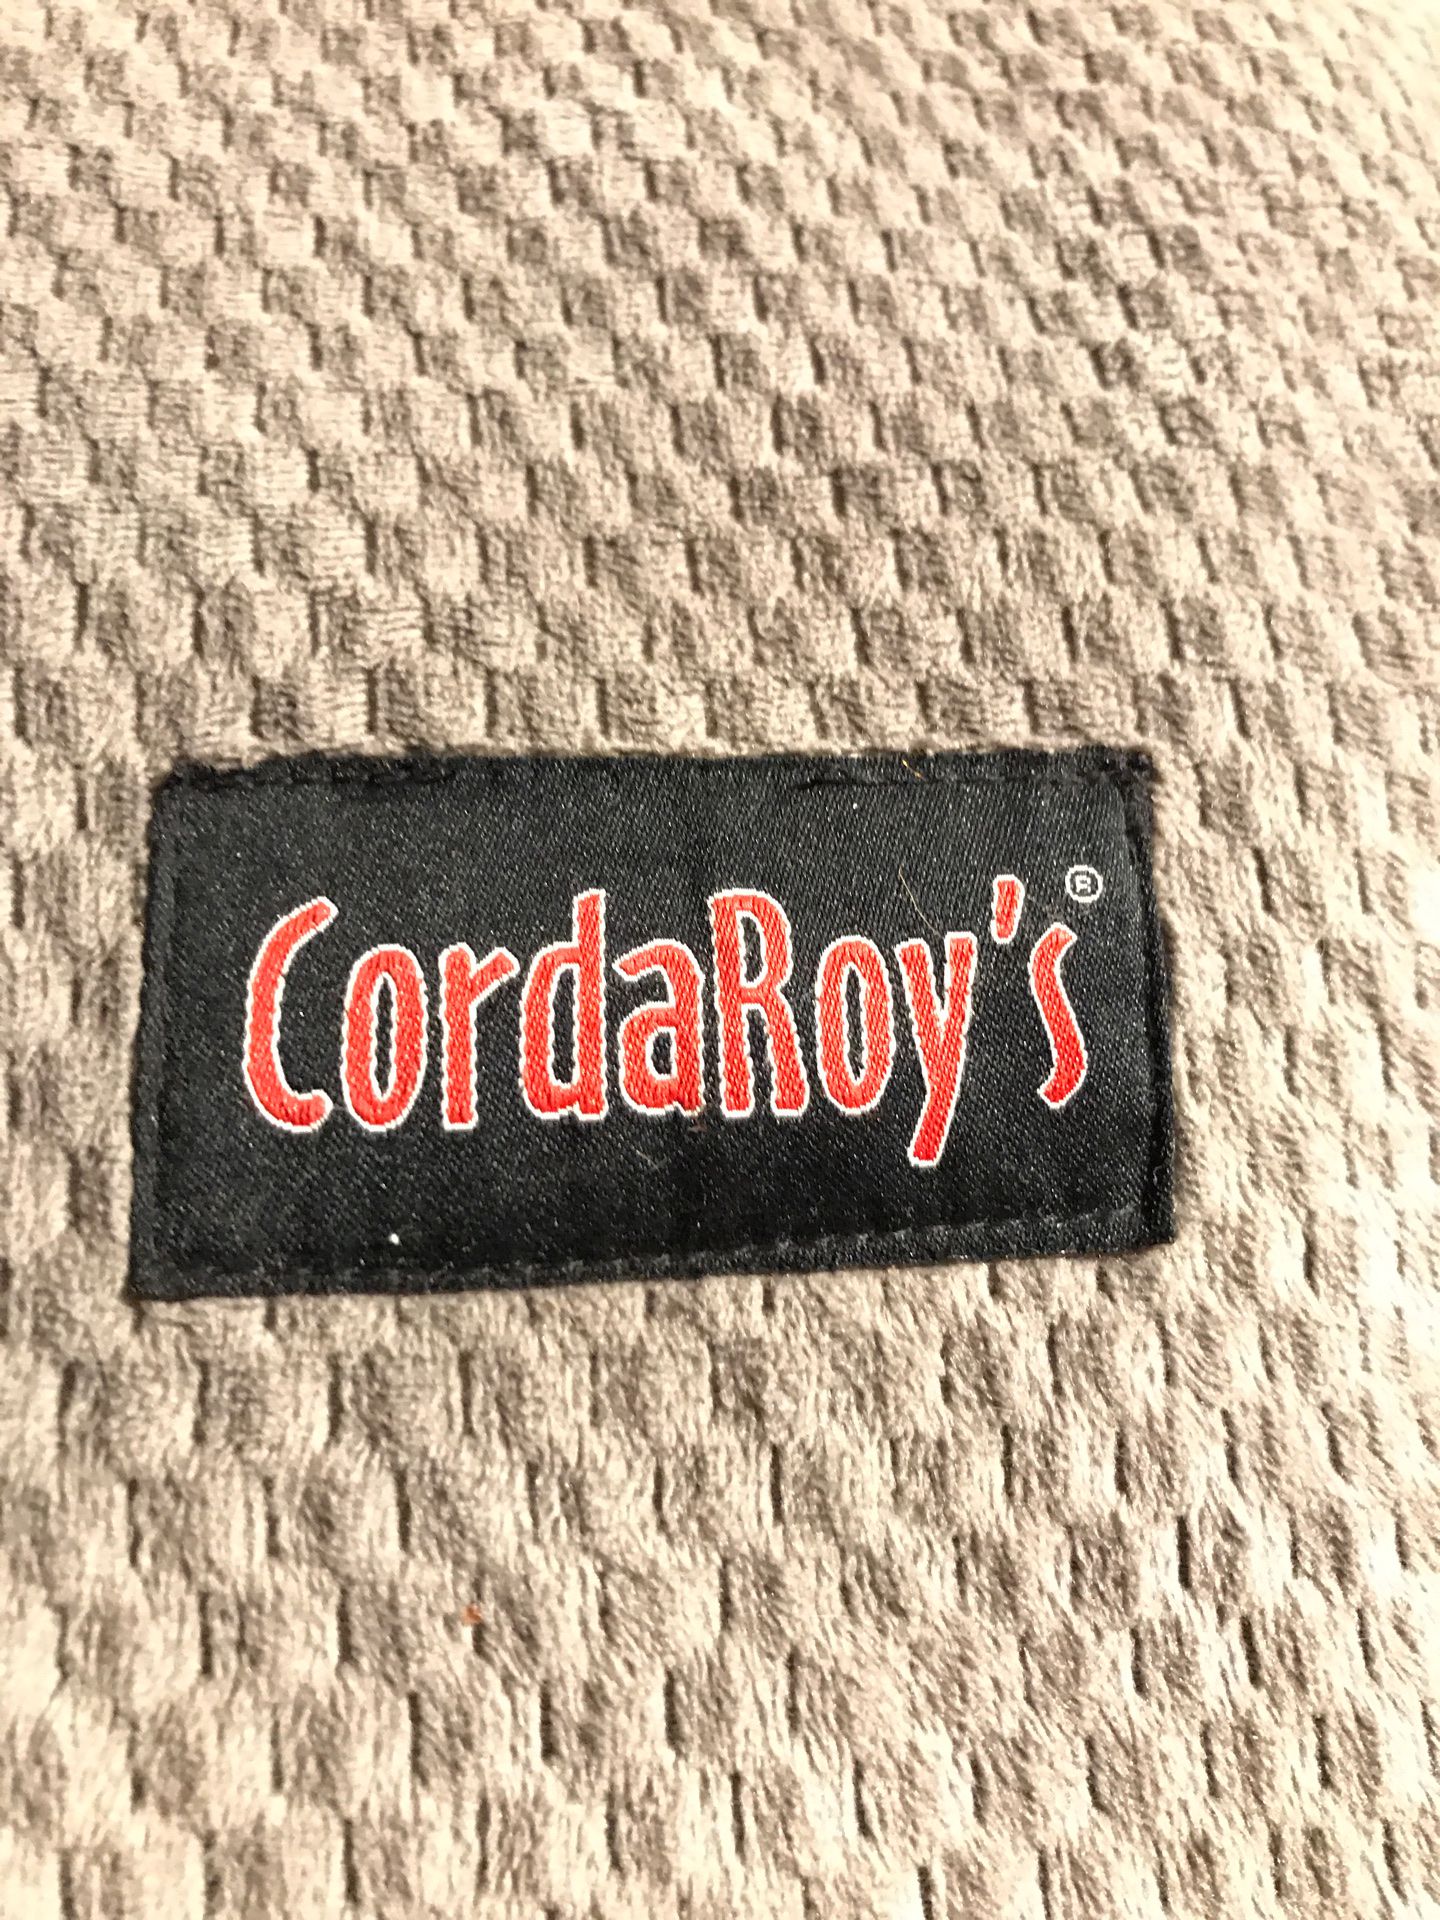 CordaRoy’s Chenille bean bag